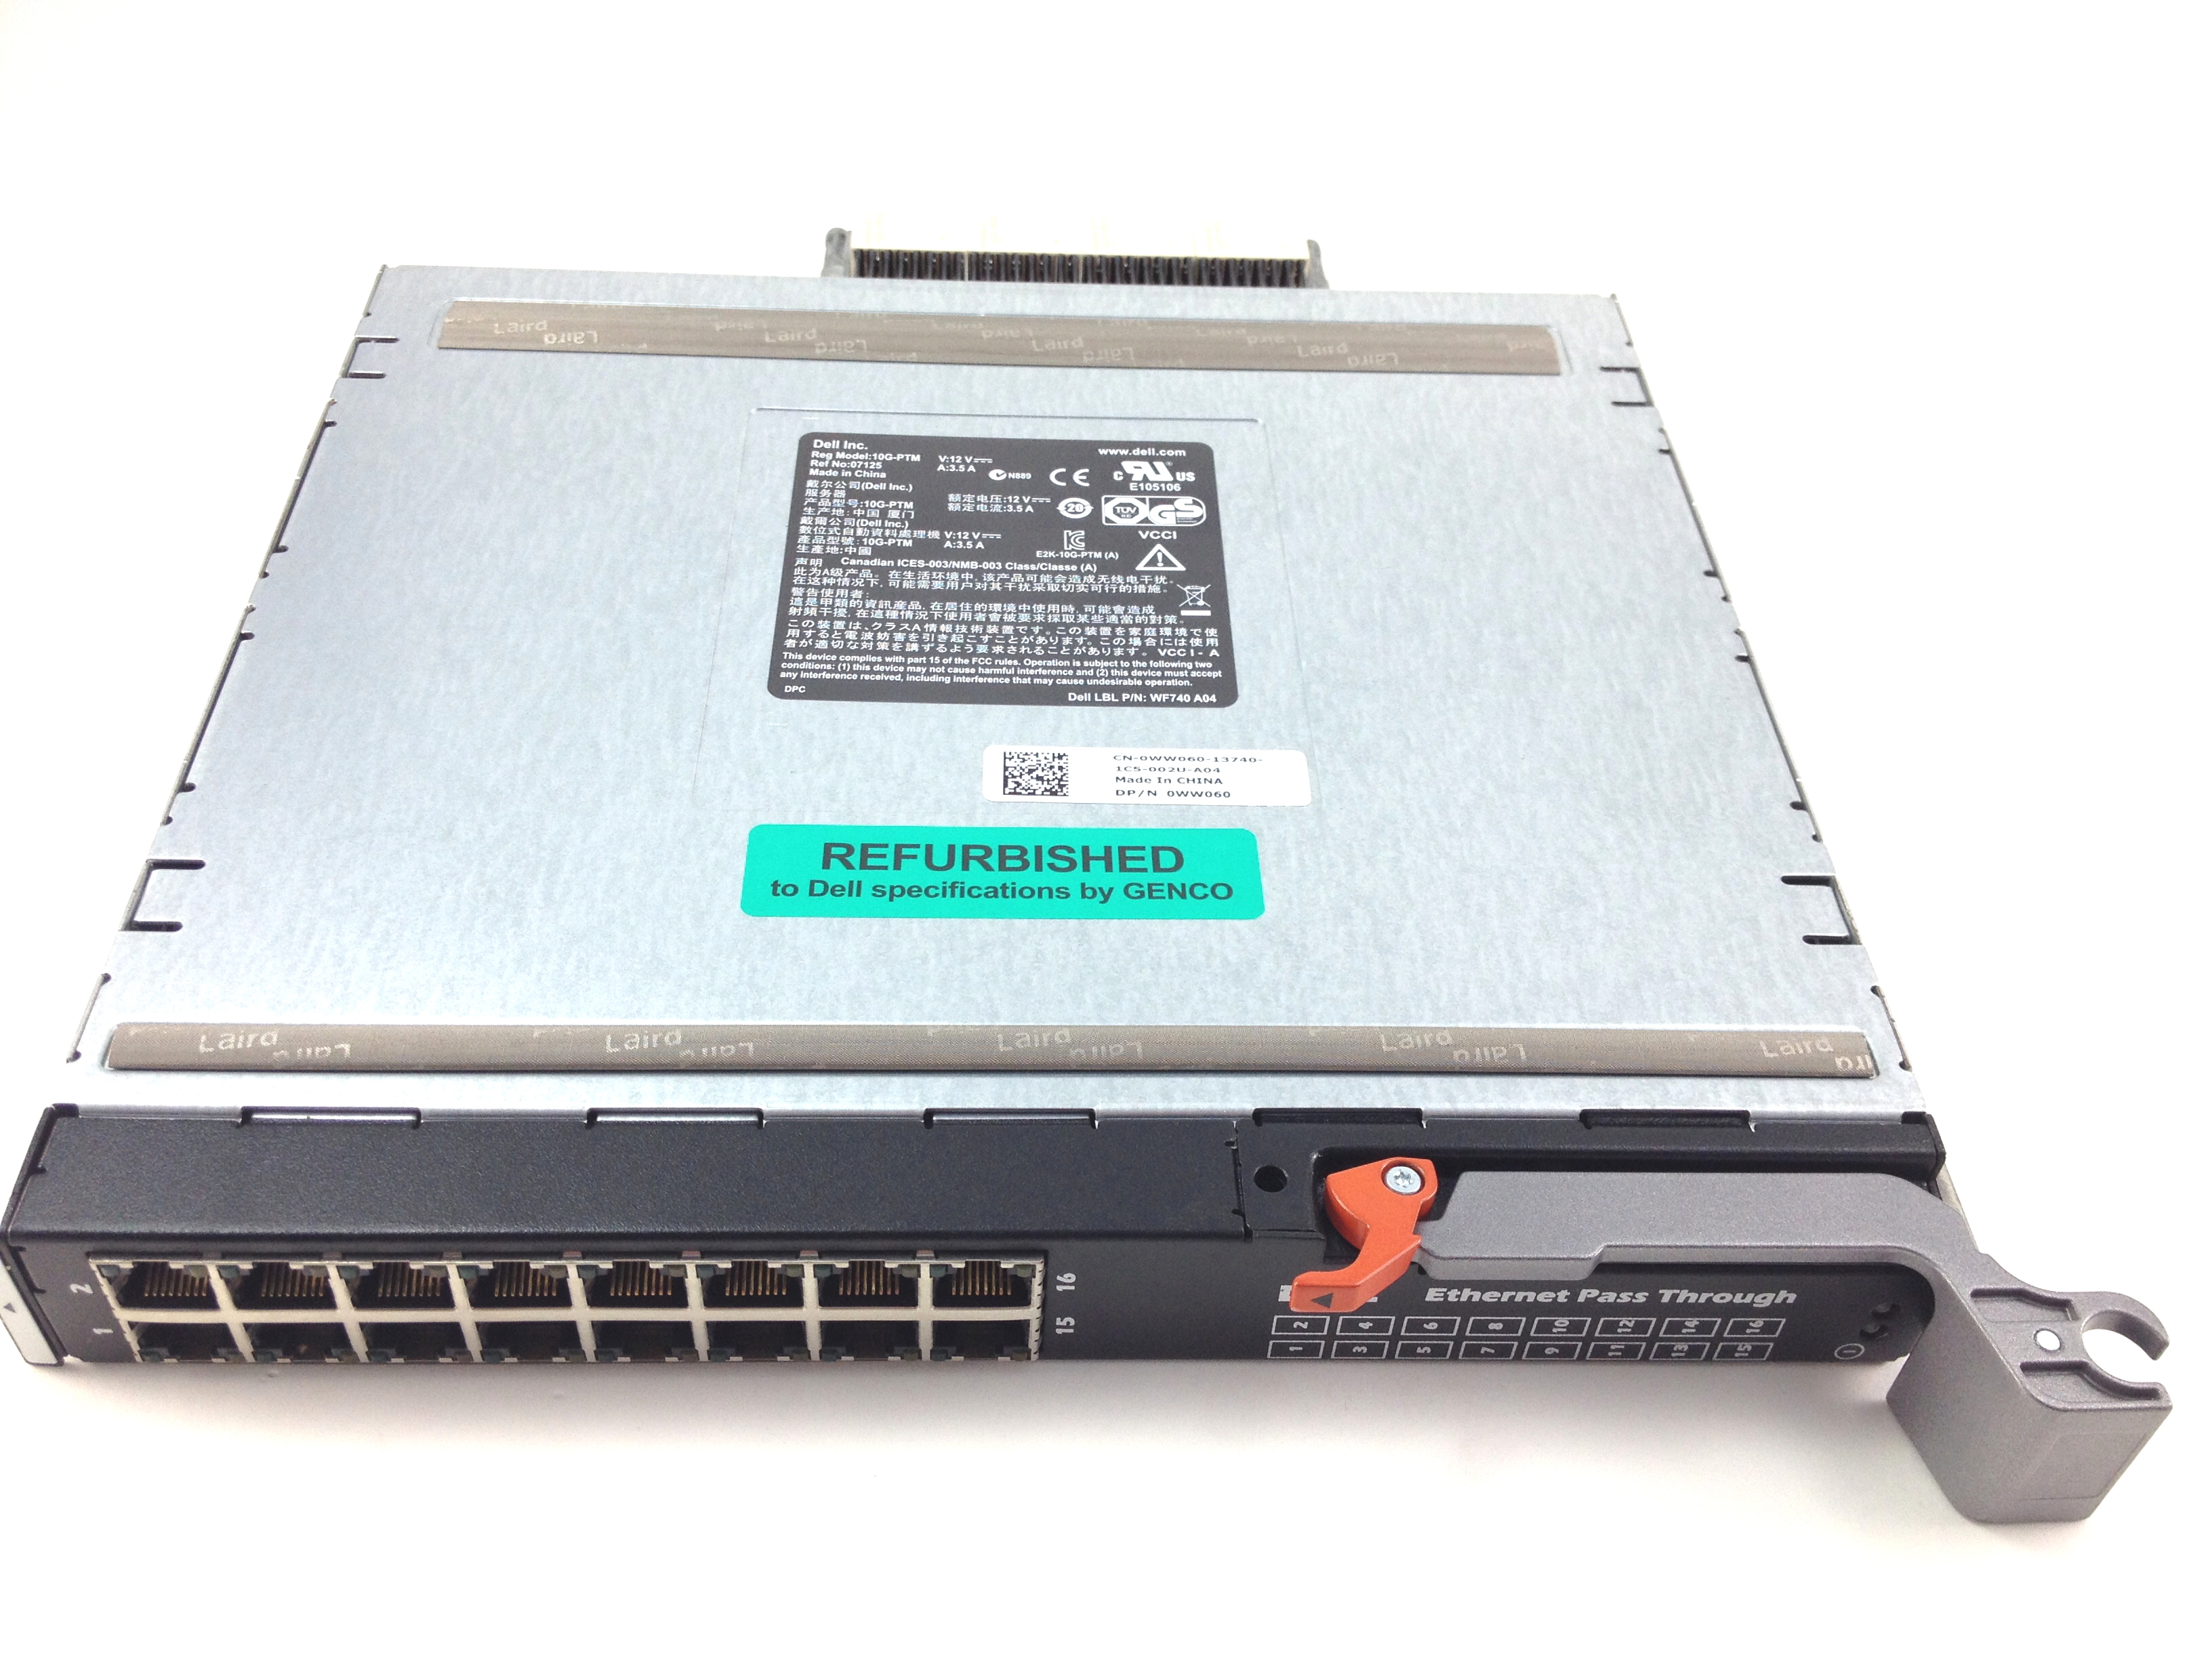 Dell Powervault 10G-Ptm 16Port Ethernet Pass Through Module (WW060)